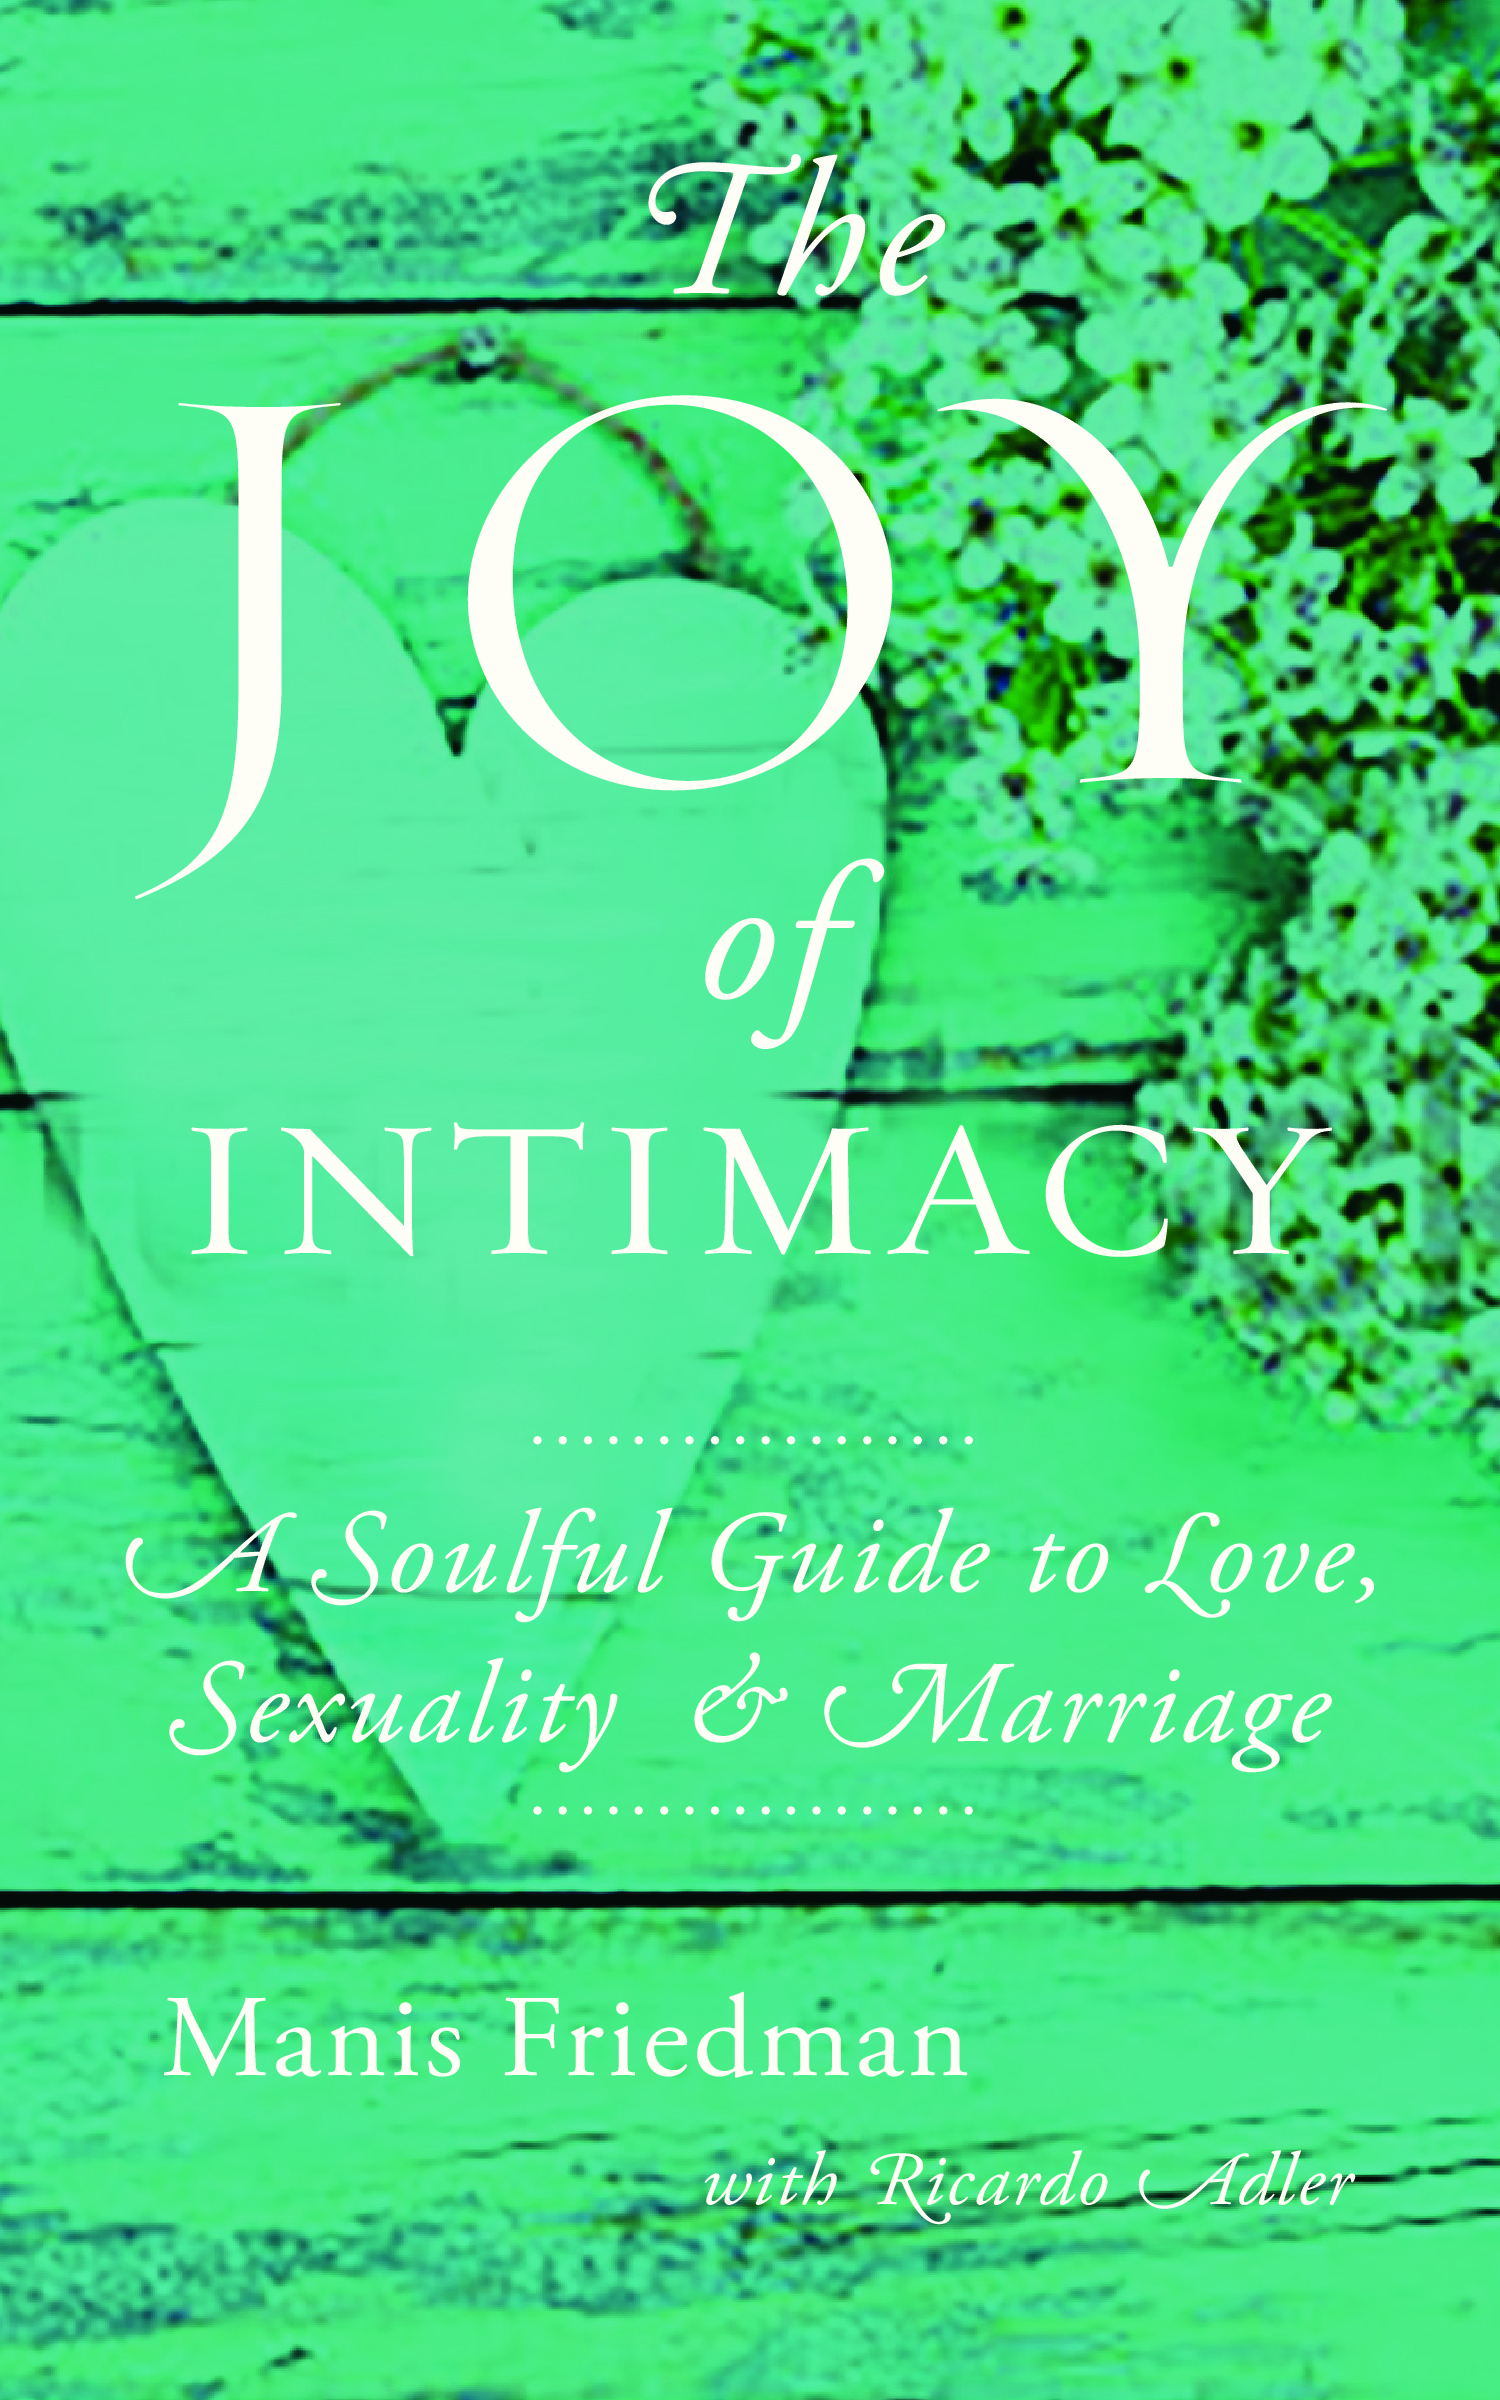 The Joy of Intimacy 